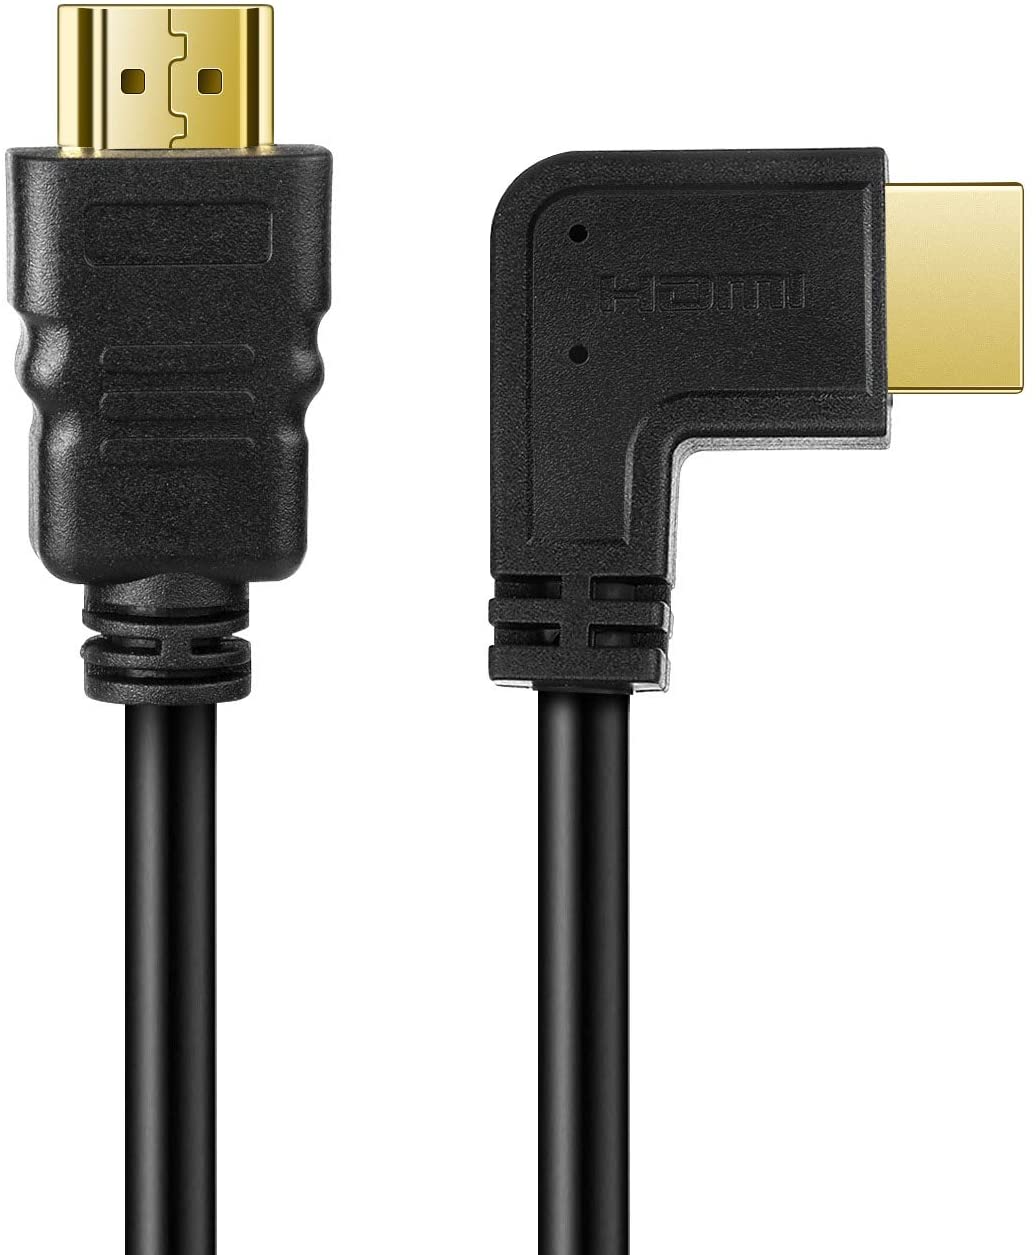 Cable HDMI de angulo recto 3 pies – Cable HDMI 2.0 de alta velocidad UHD 4K 60Hz 2K 2160p Full HD 1080p Quad HD 1440p